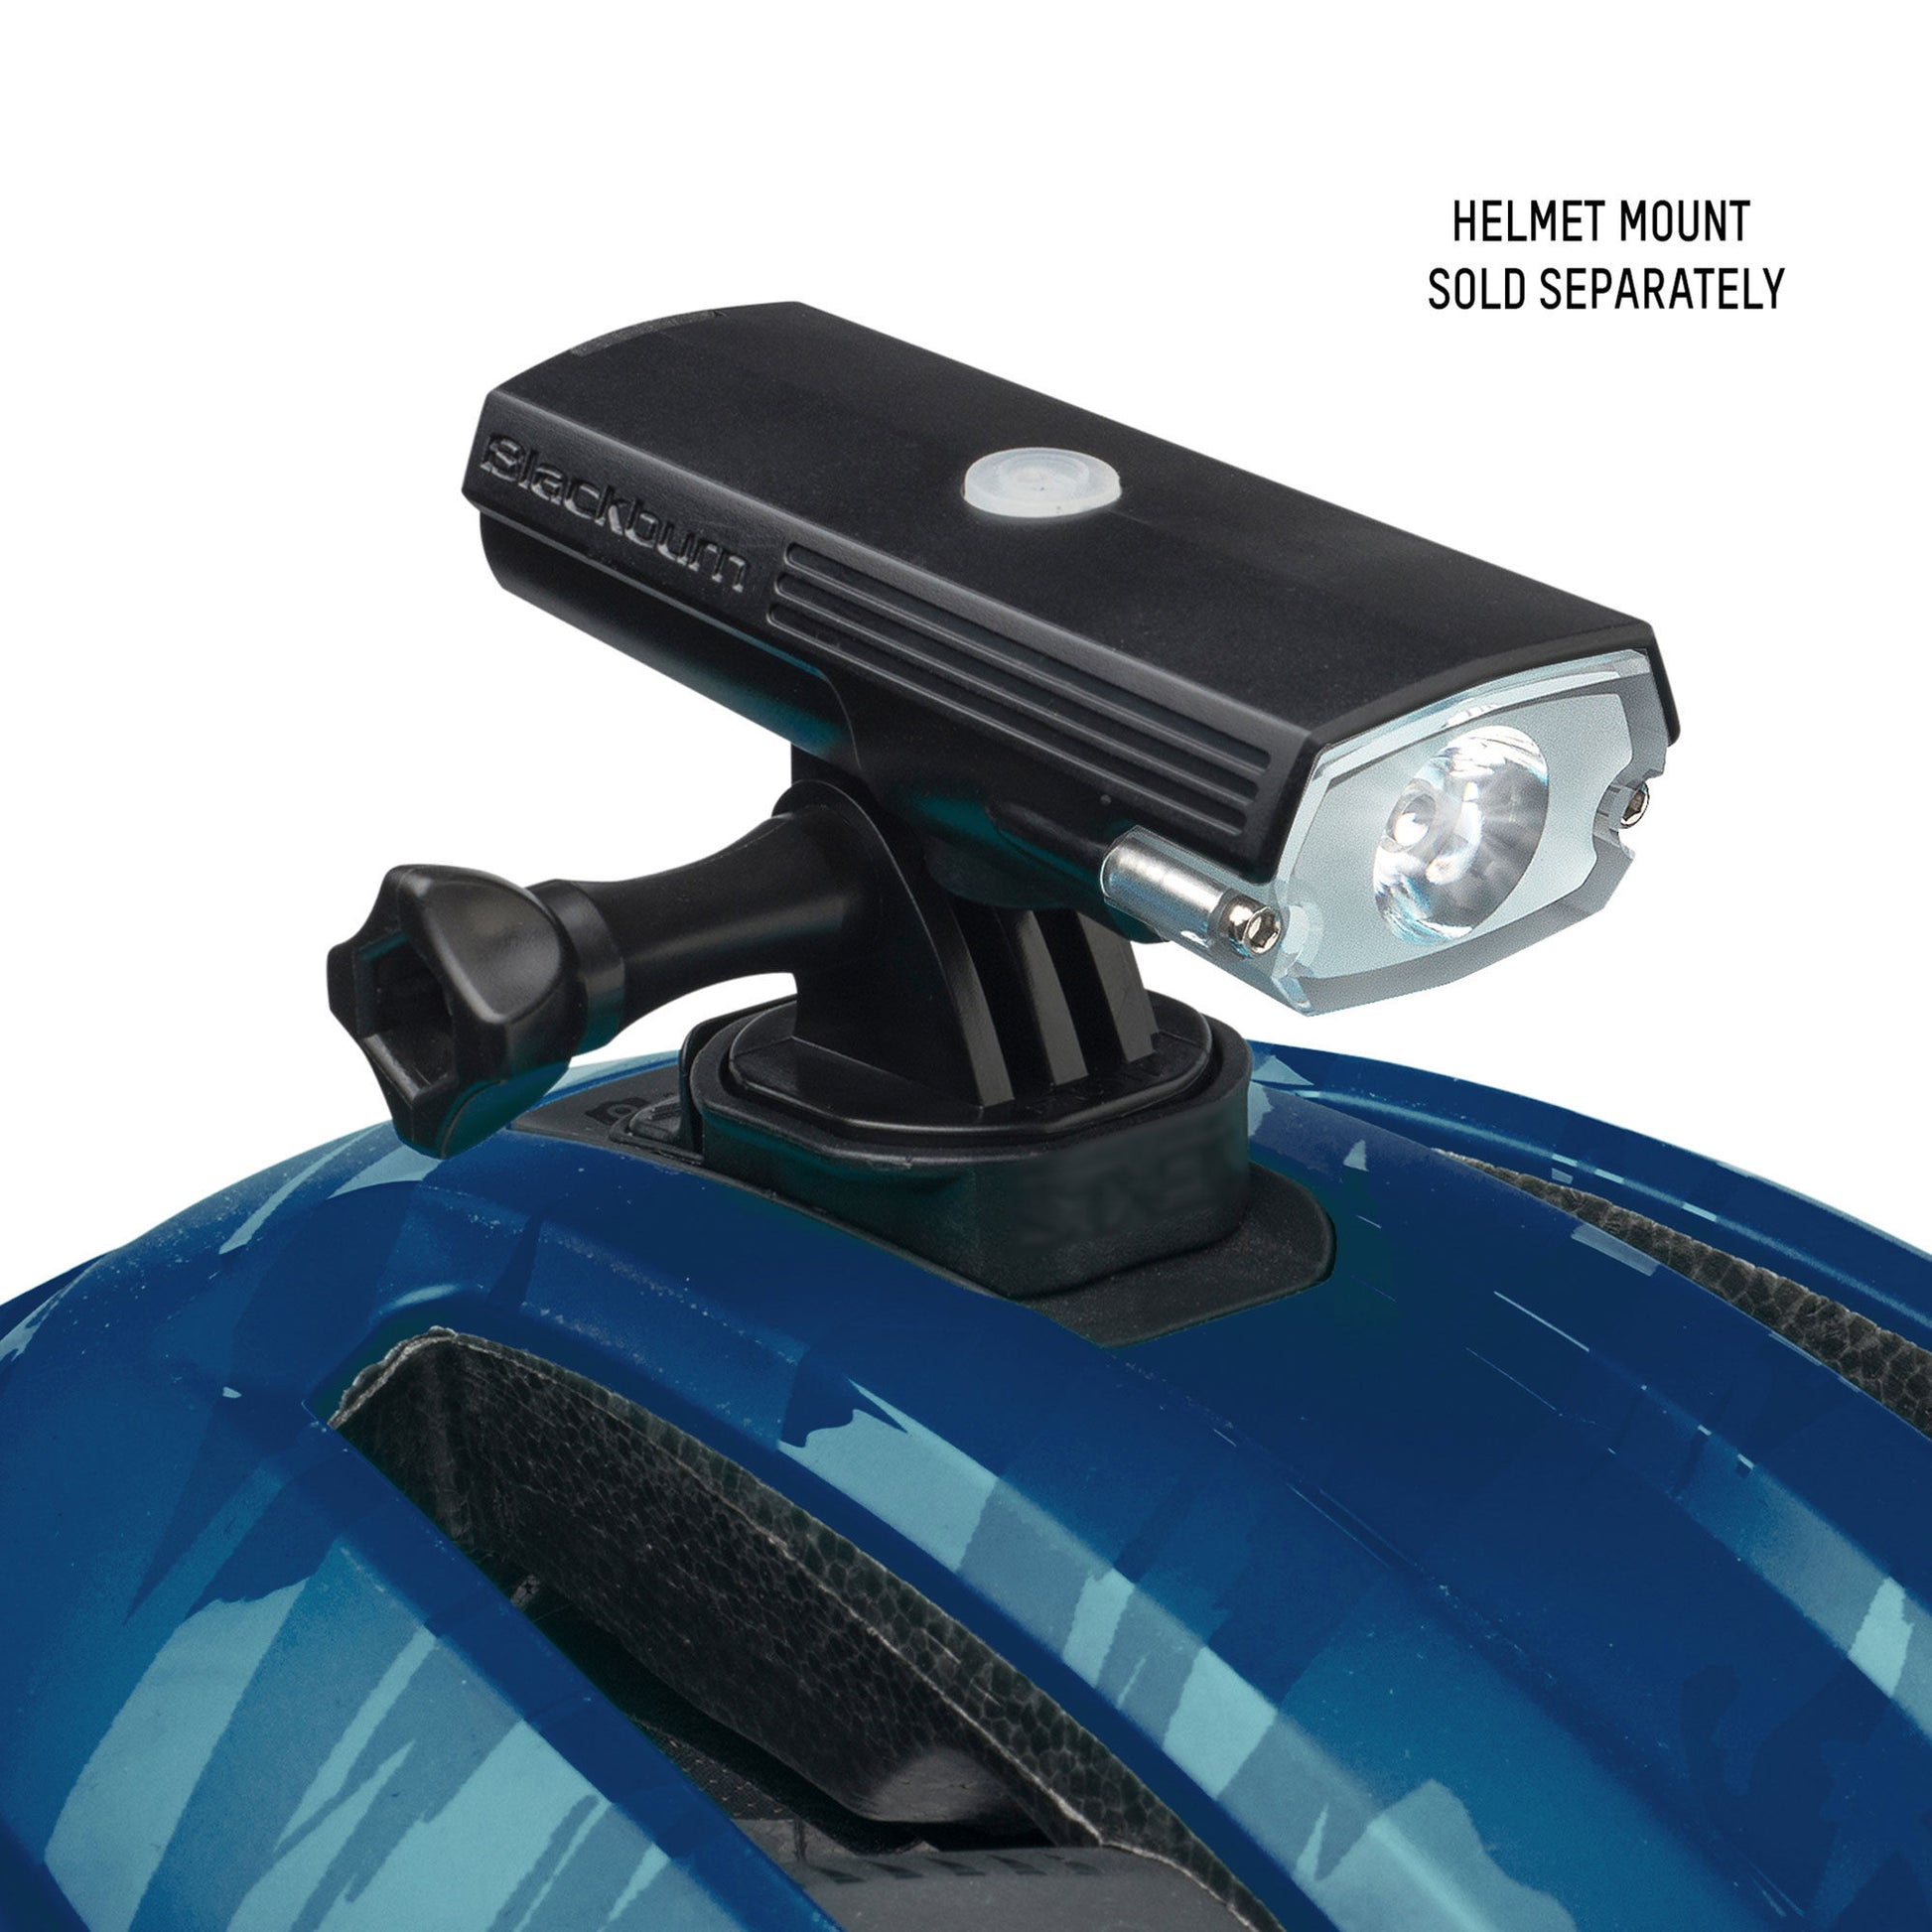 Blackburn Dayblazer 550 Front + Grid Rear Light Combo Set Black OS Lights